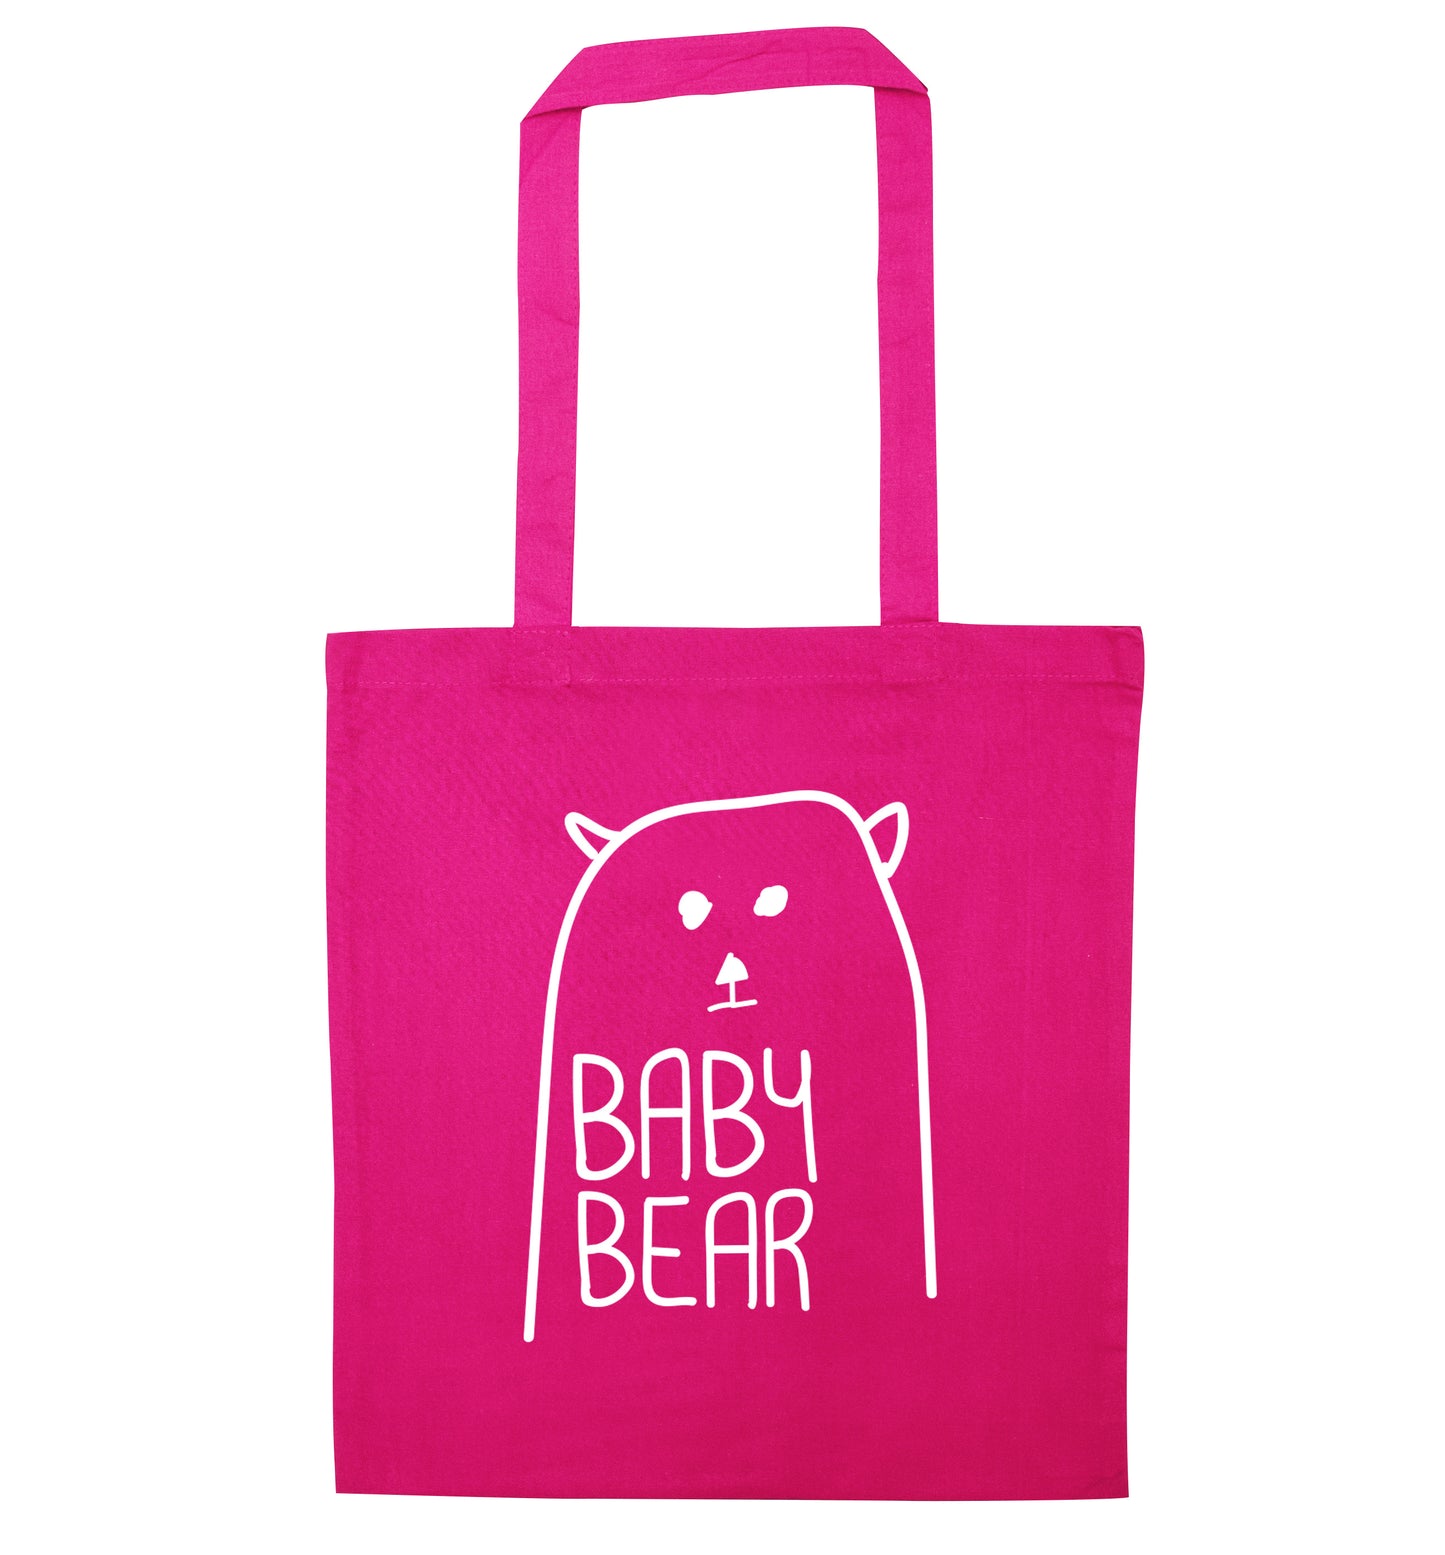 Baby bear pink tote bag